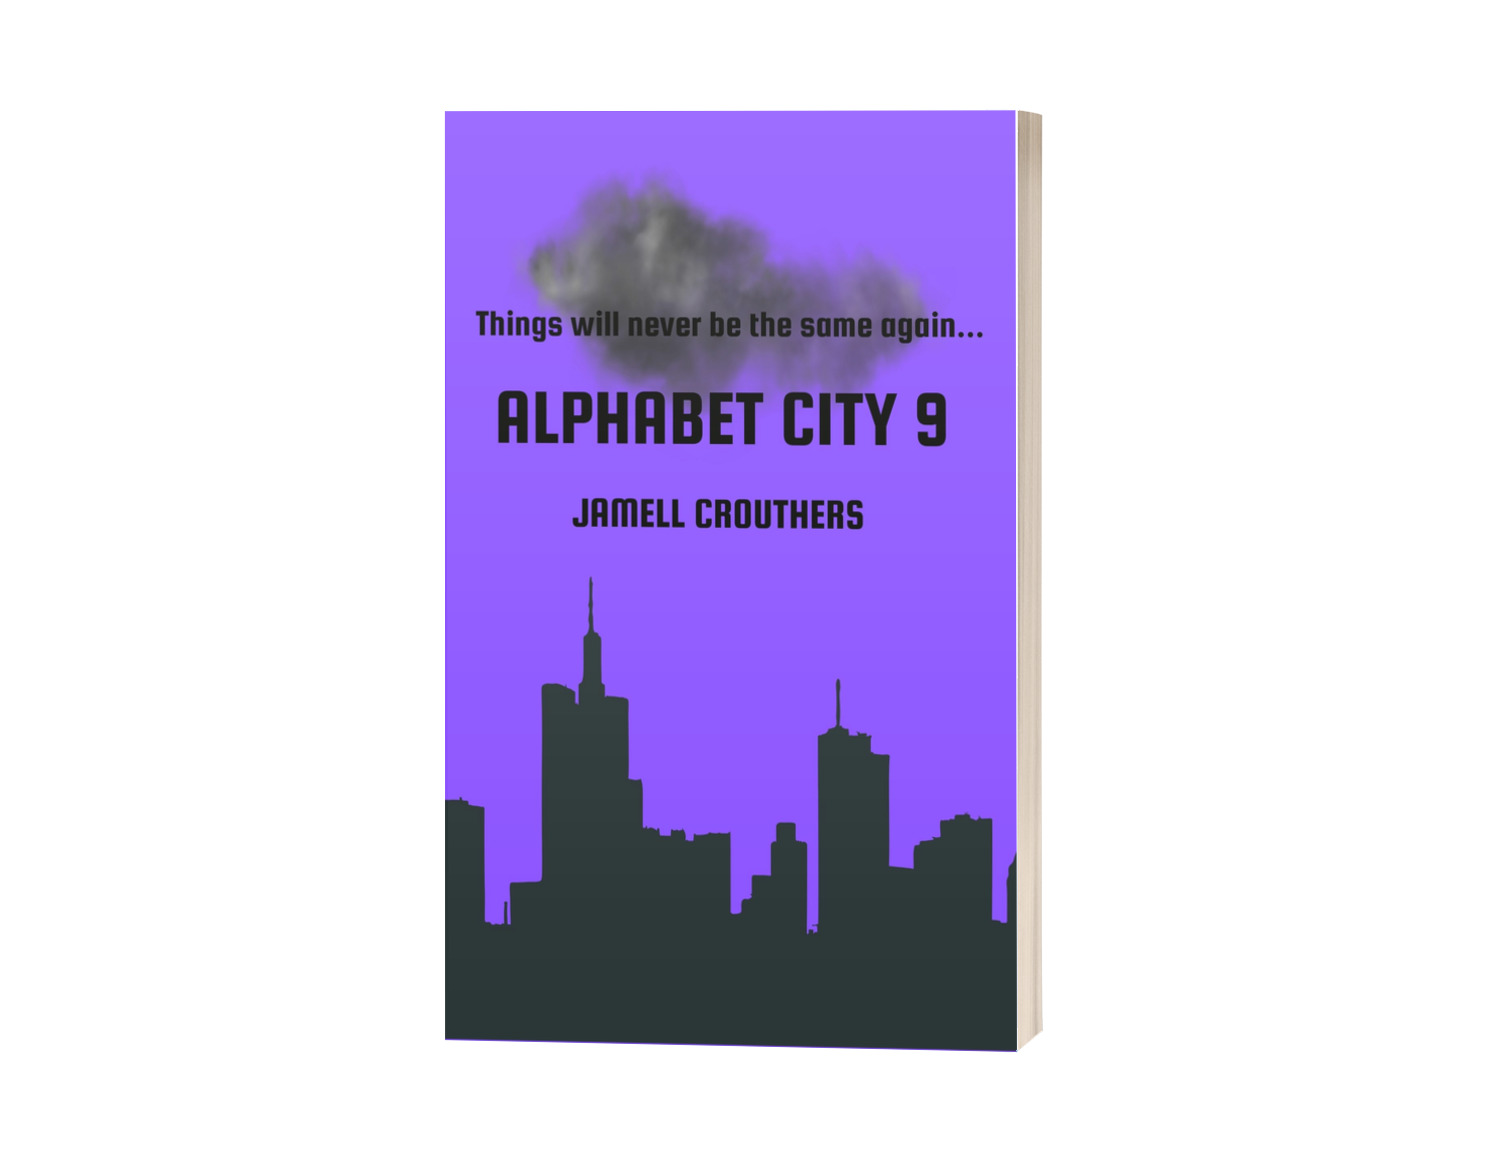 Writing 'Alphabet City 9'